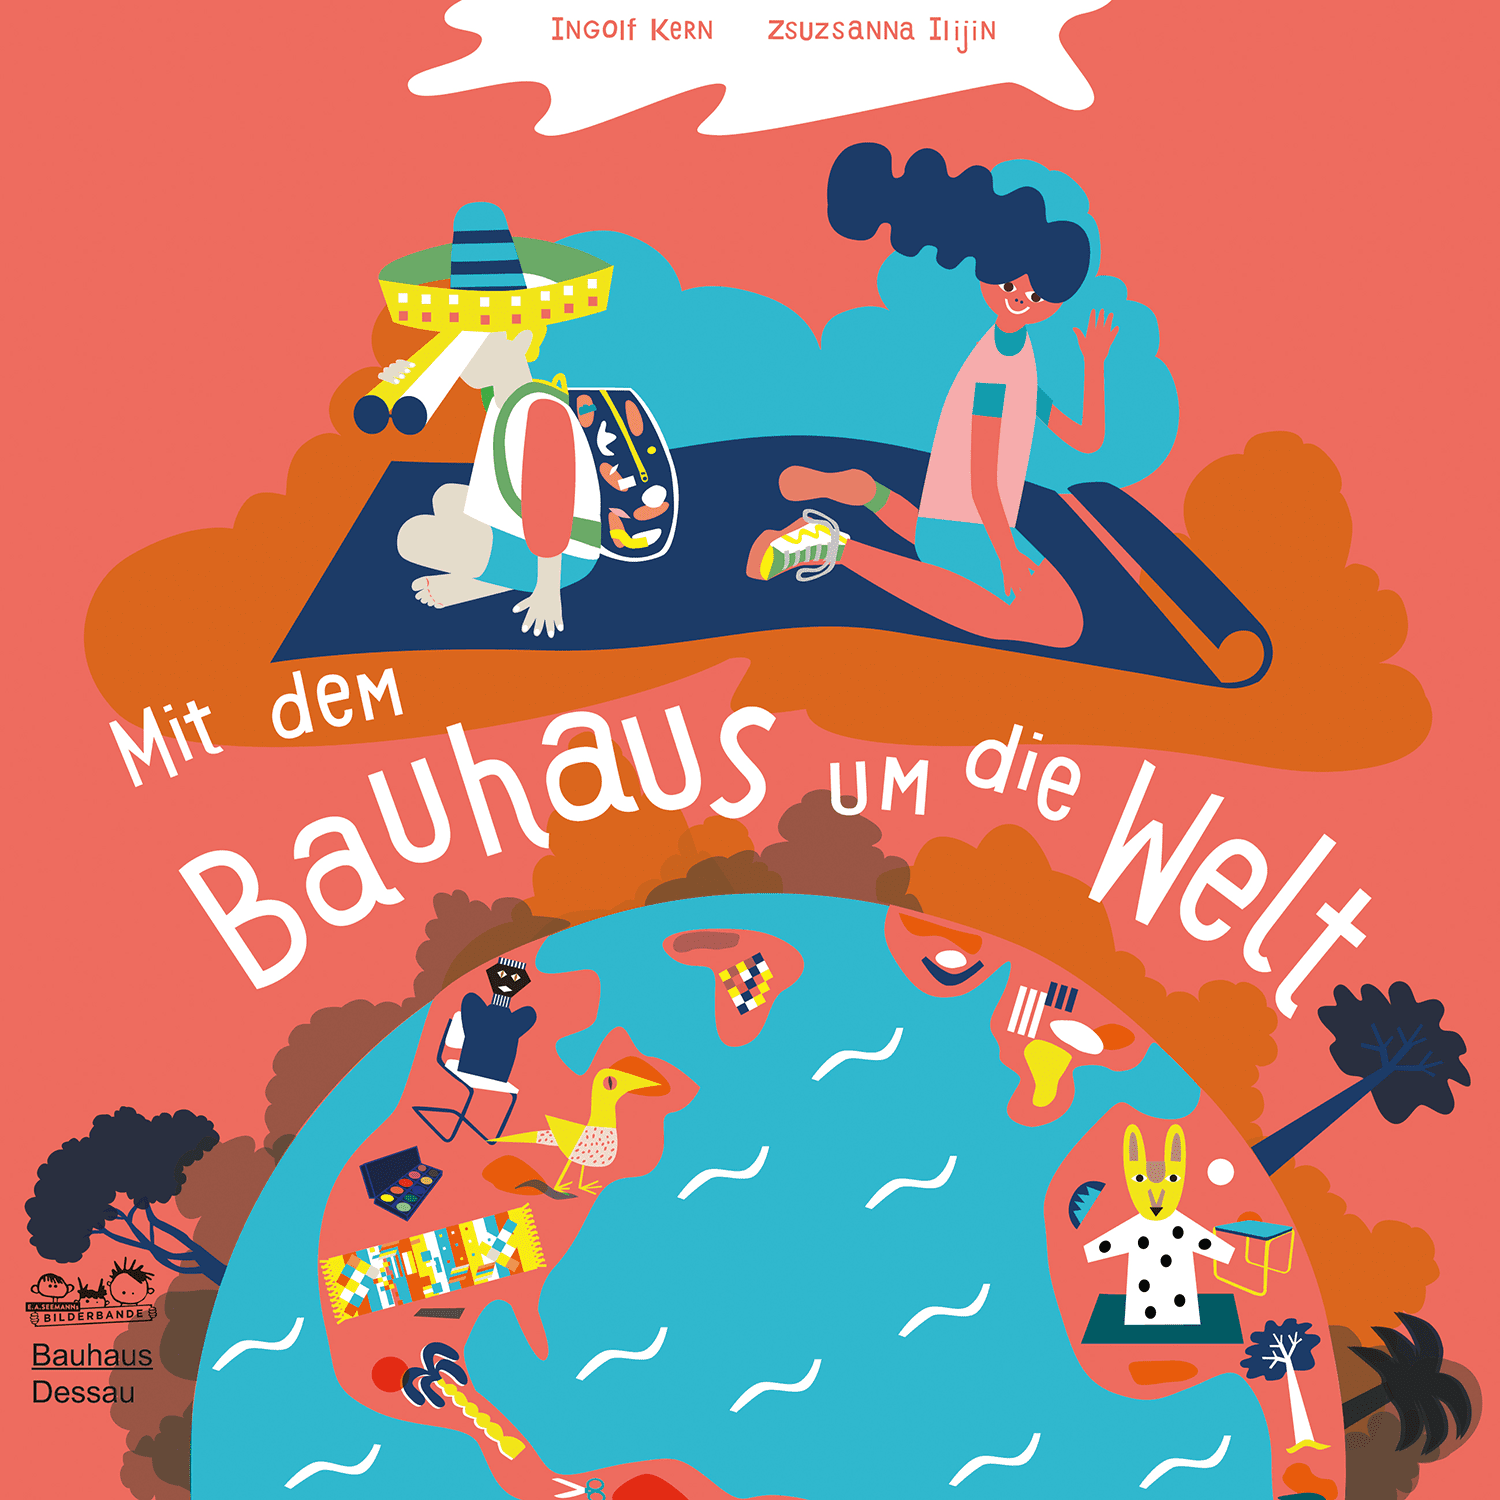 Bauhaus ile dünya turu resmi